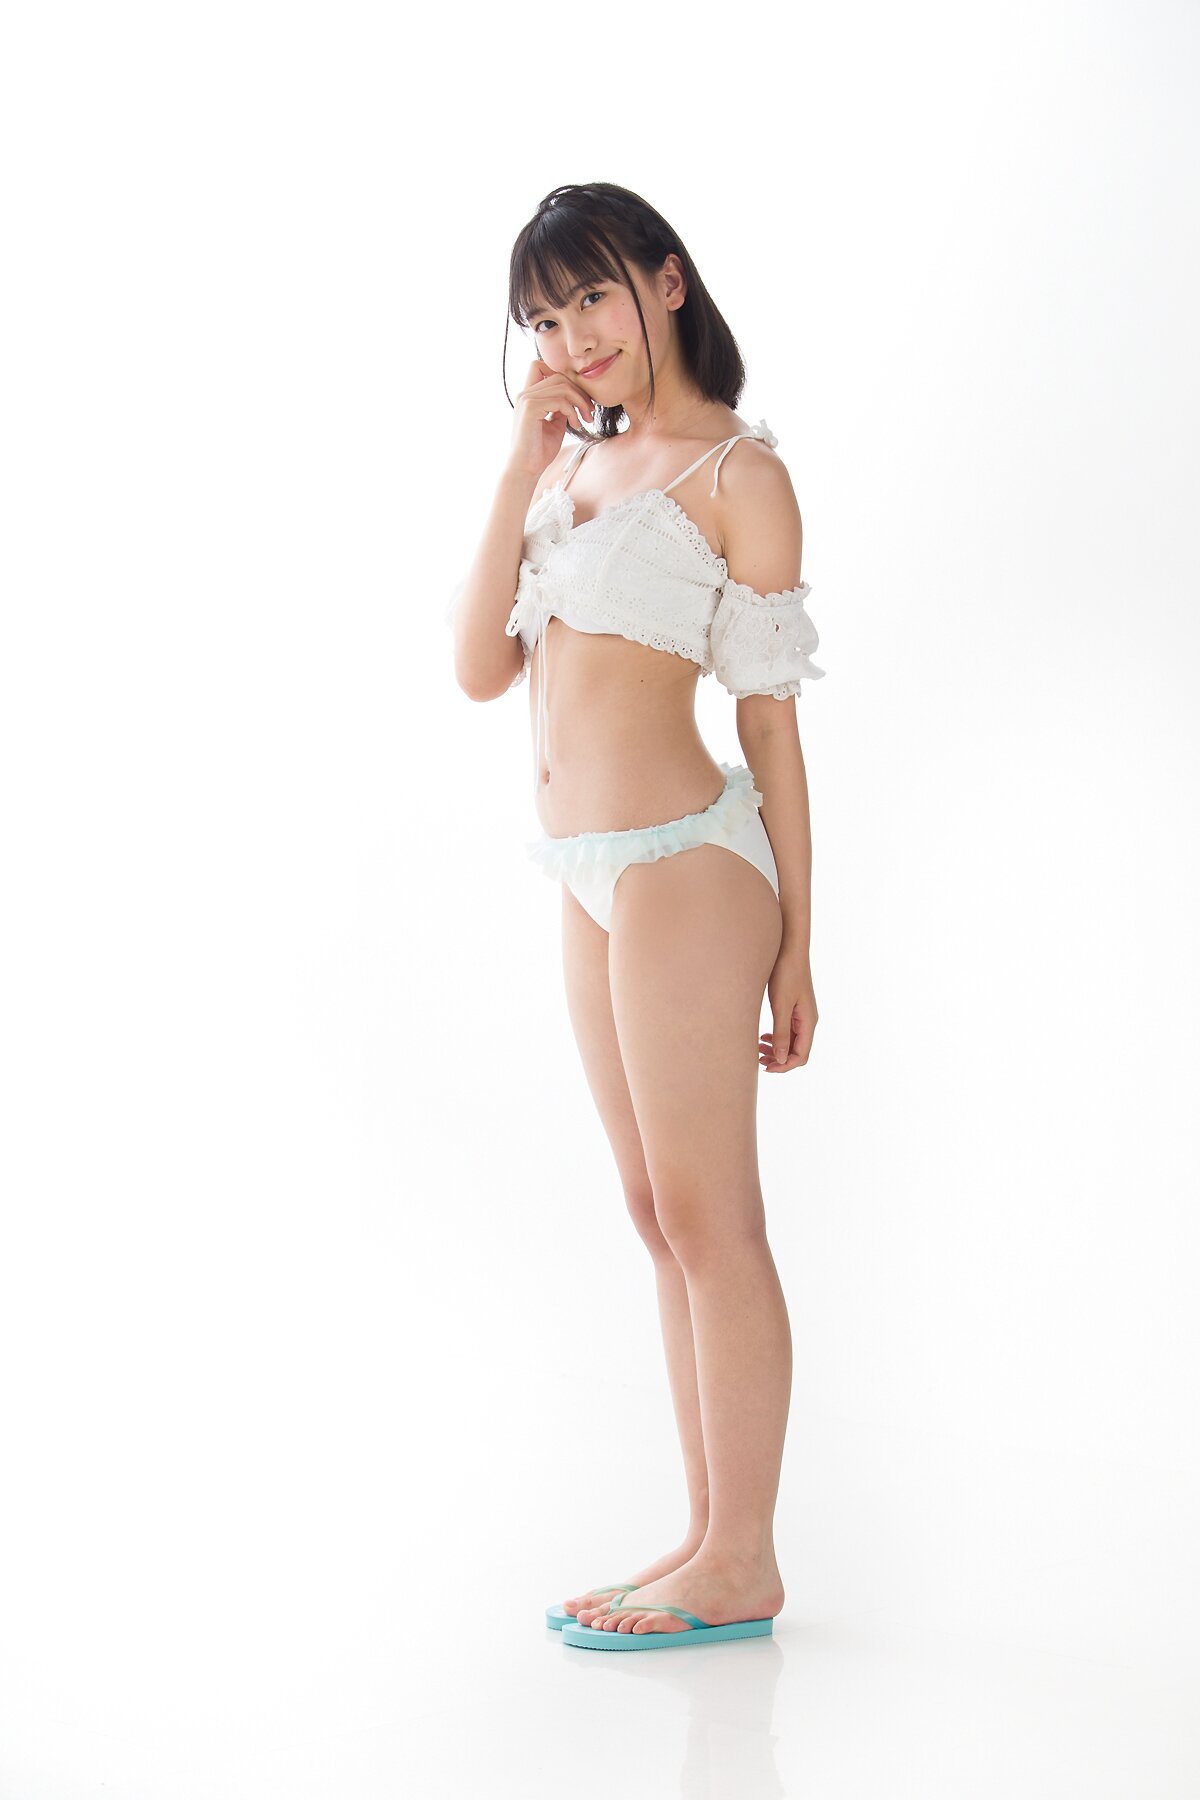 Minisuka tv 2020 04 16 Sarina Kashiwagi 柏木さりな Premium Gallery 2 6 0012 6854521780.jpg